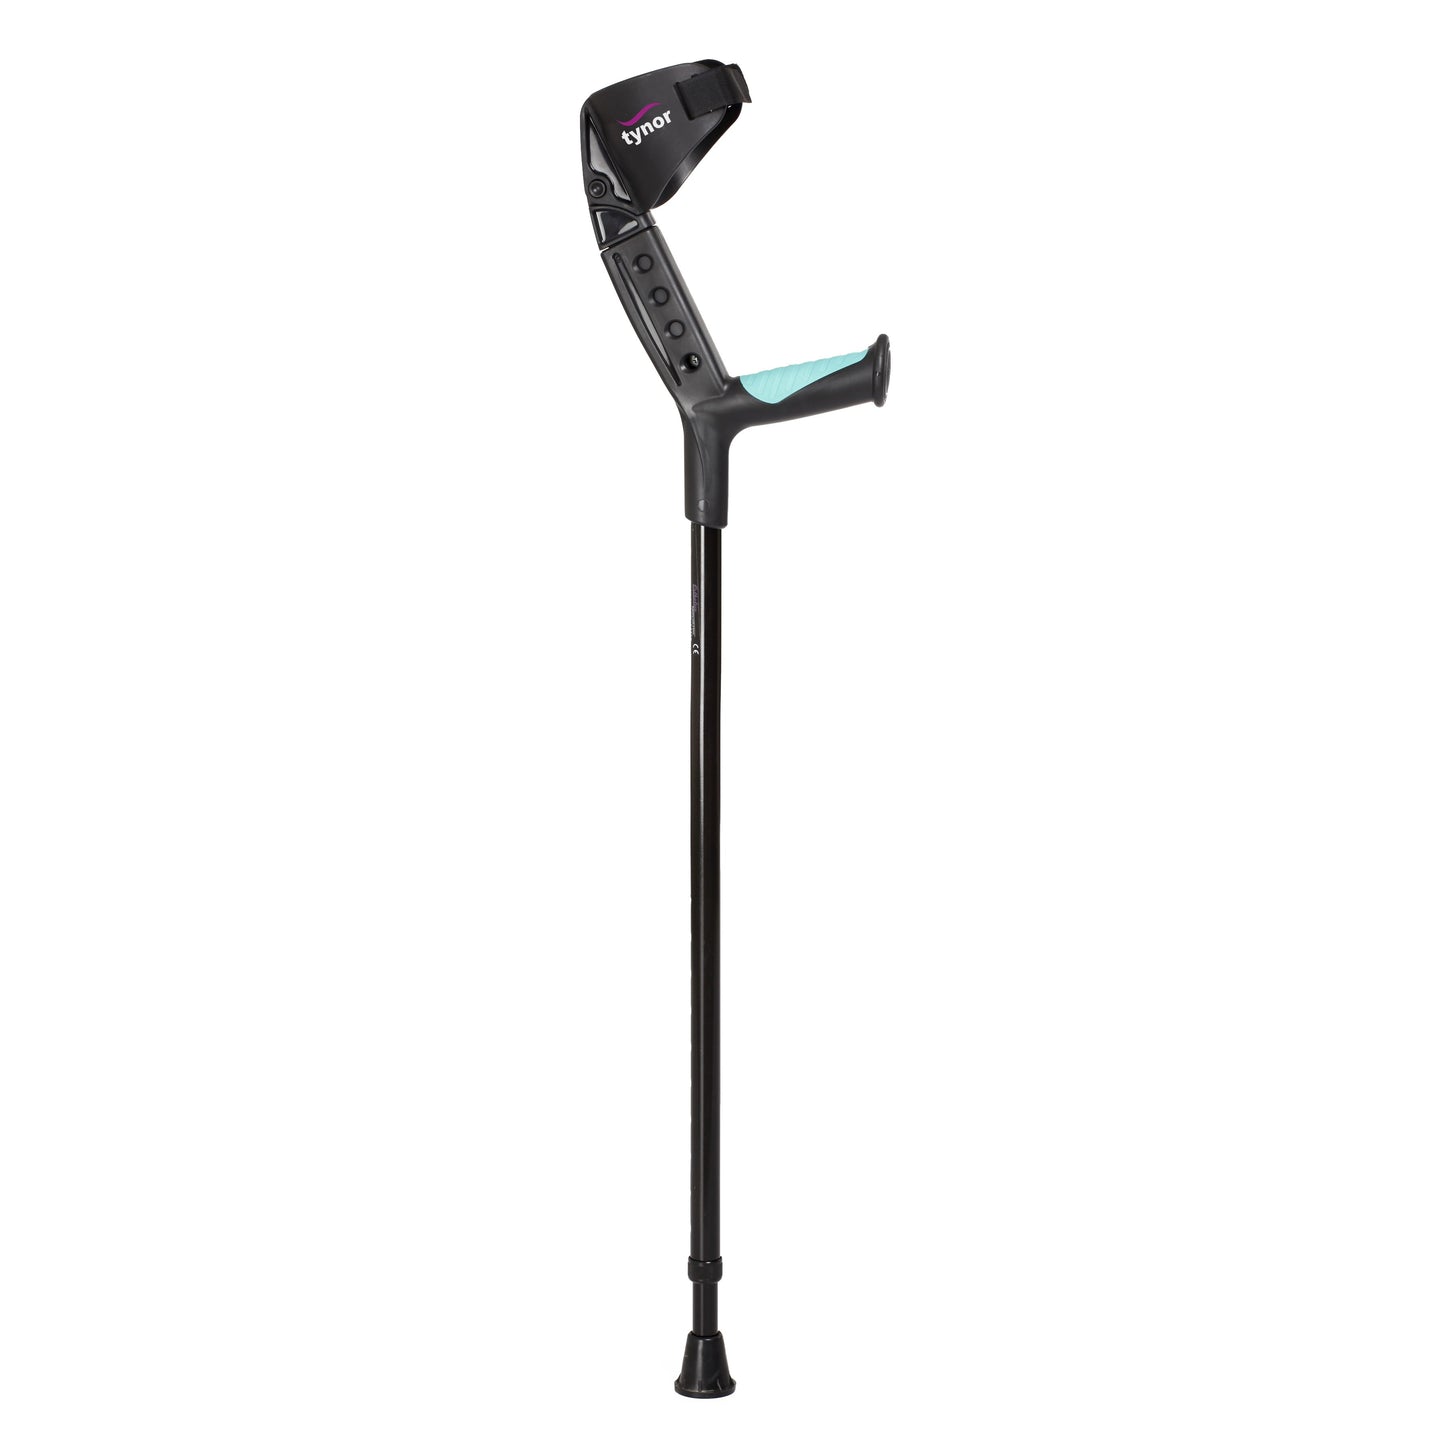 Tynor Elbow Crutch Adjustable, Universal